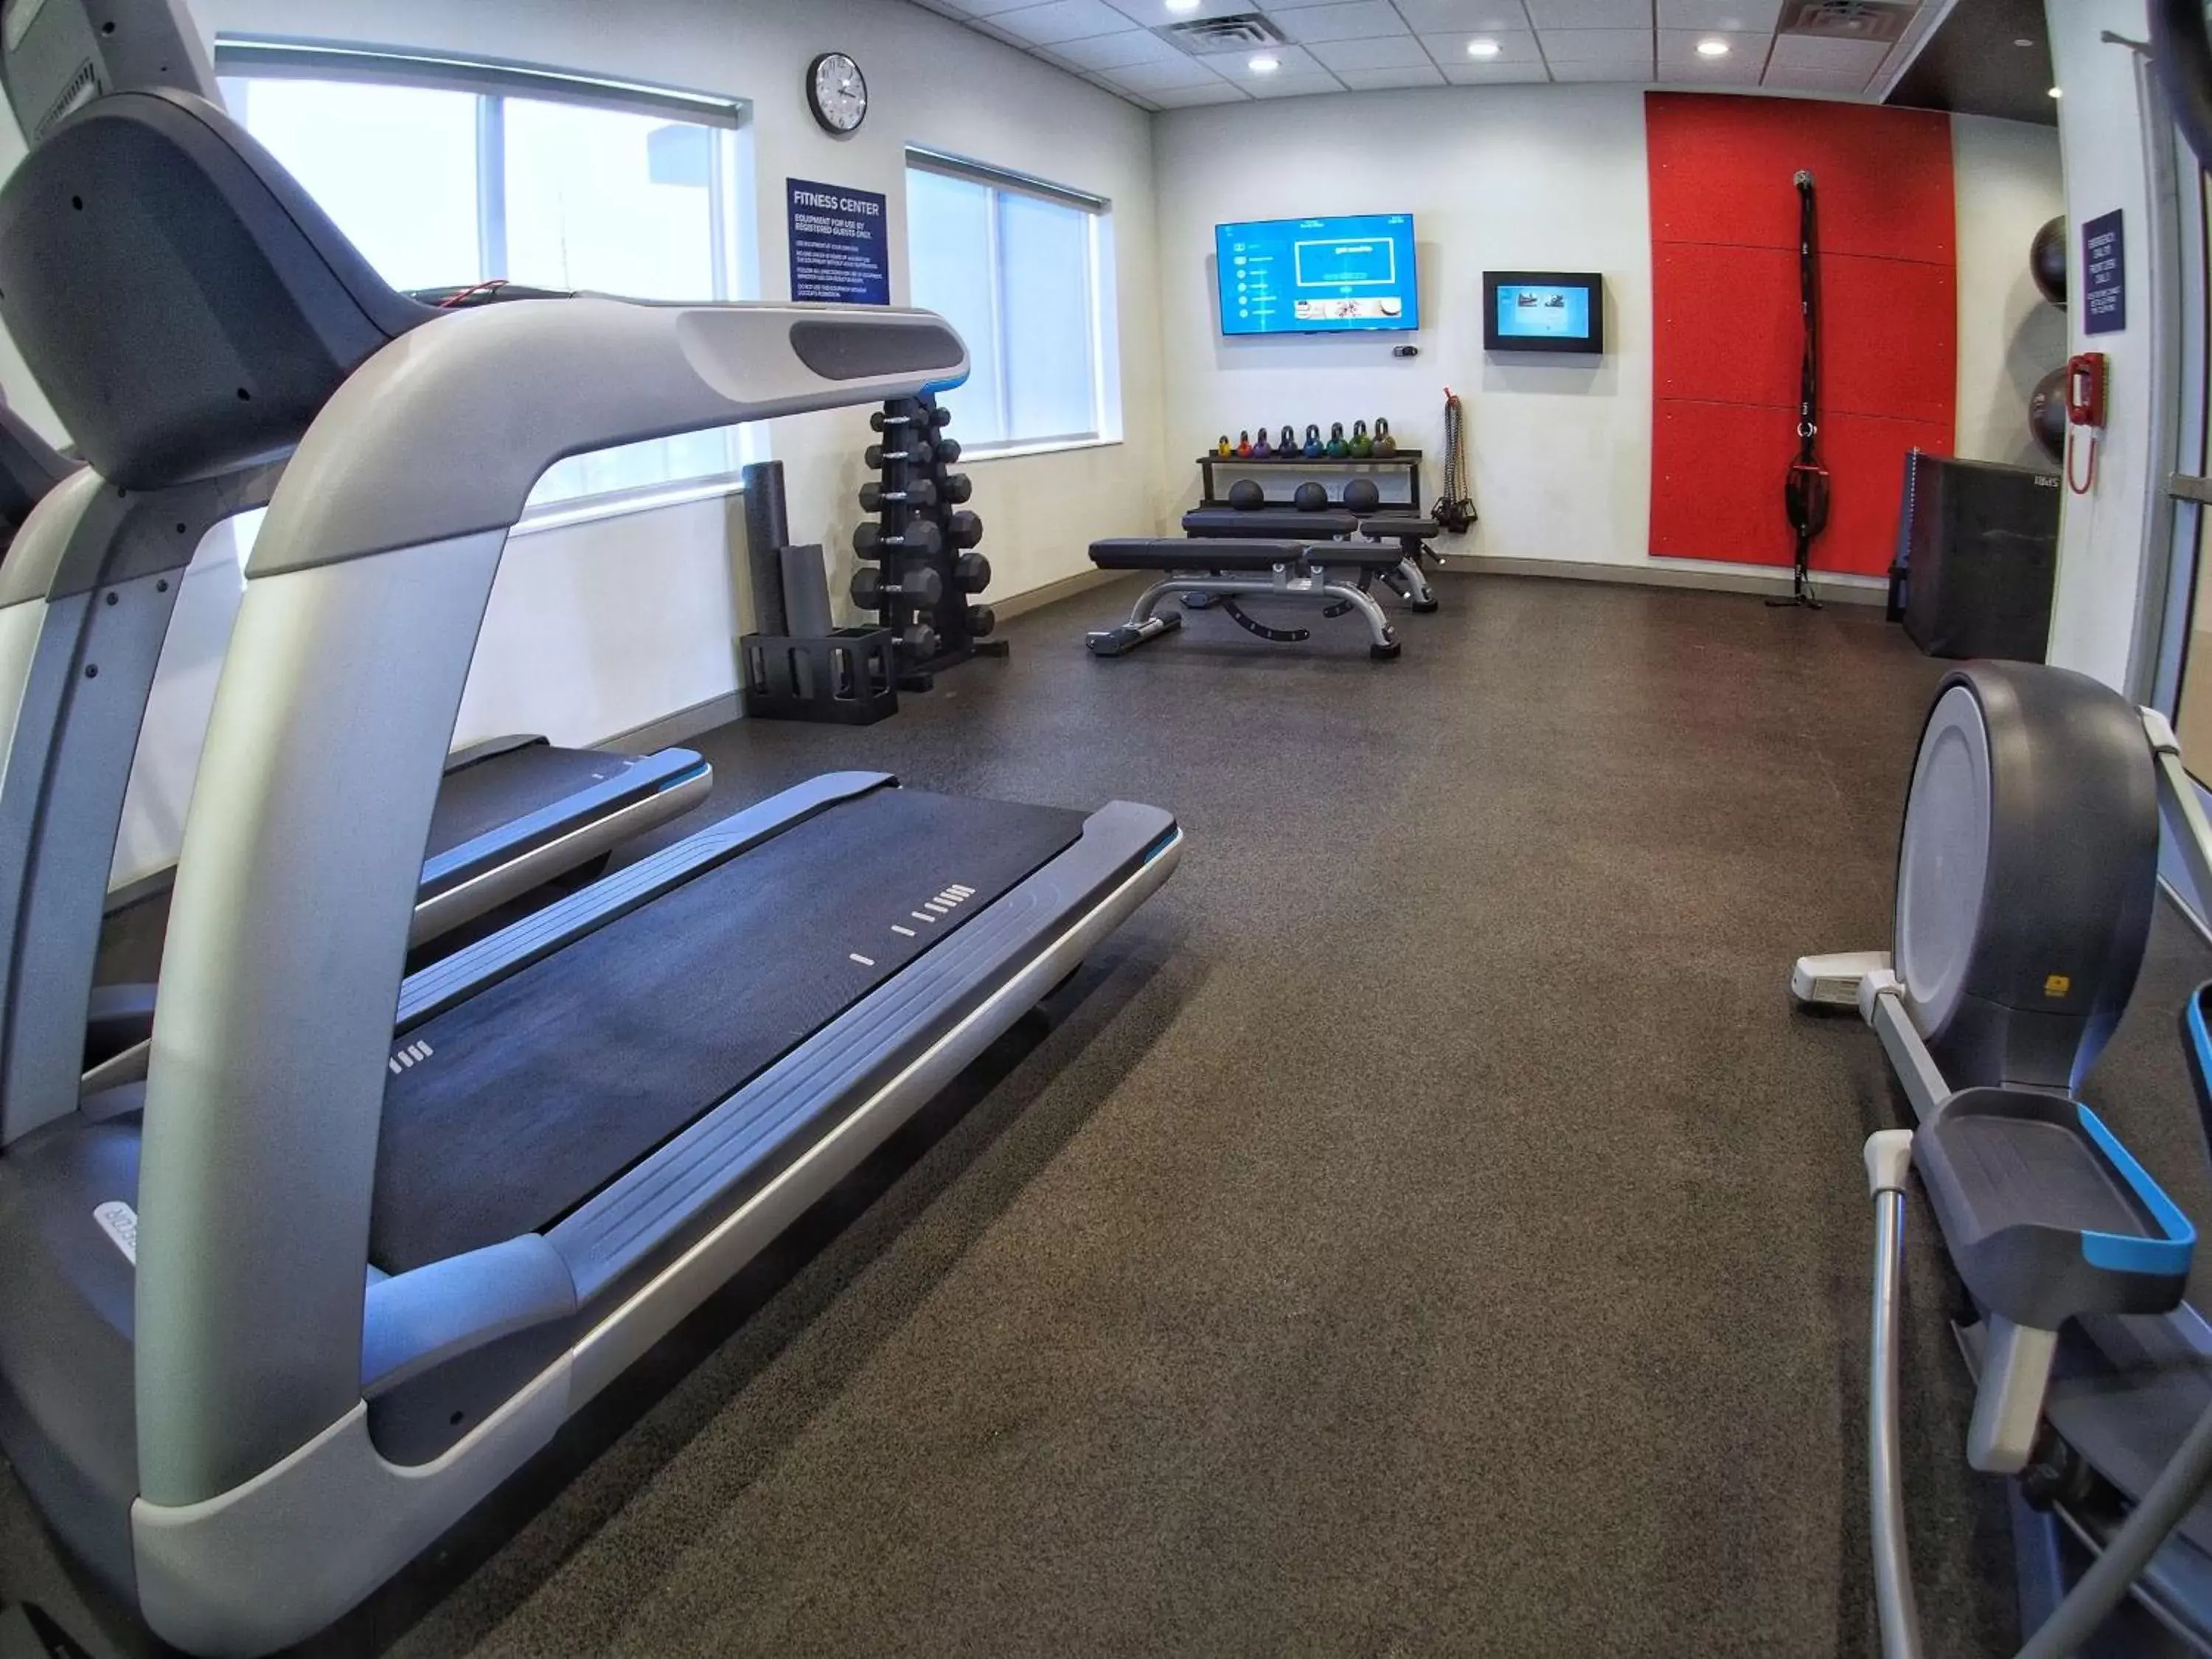 Fitness centre/facilities, Fitness Center/Facilities in Tru By Hilton Oklahoma City Airport, Ok